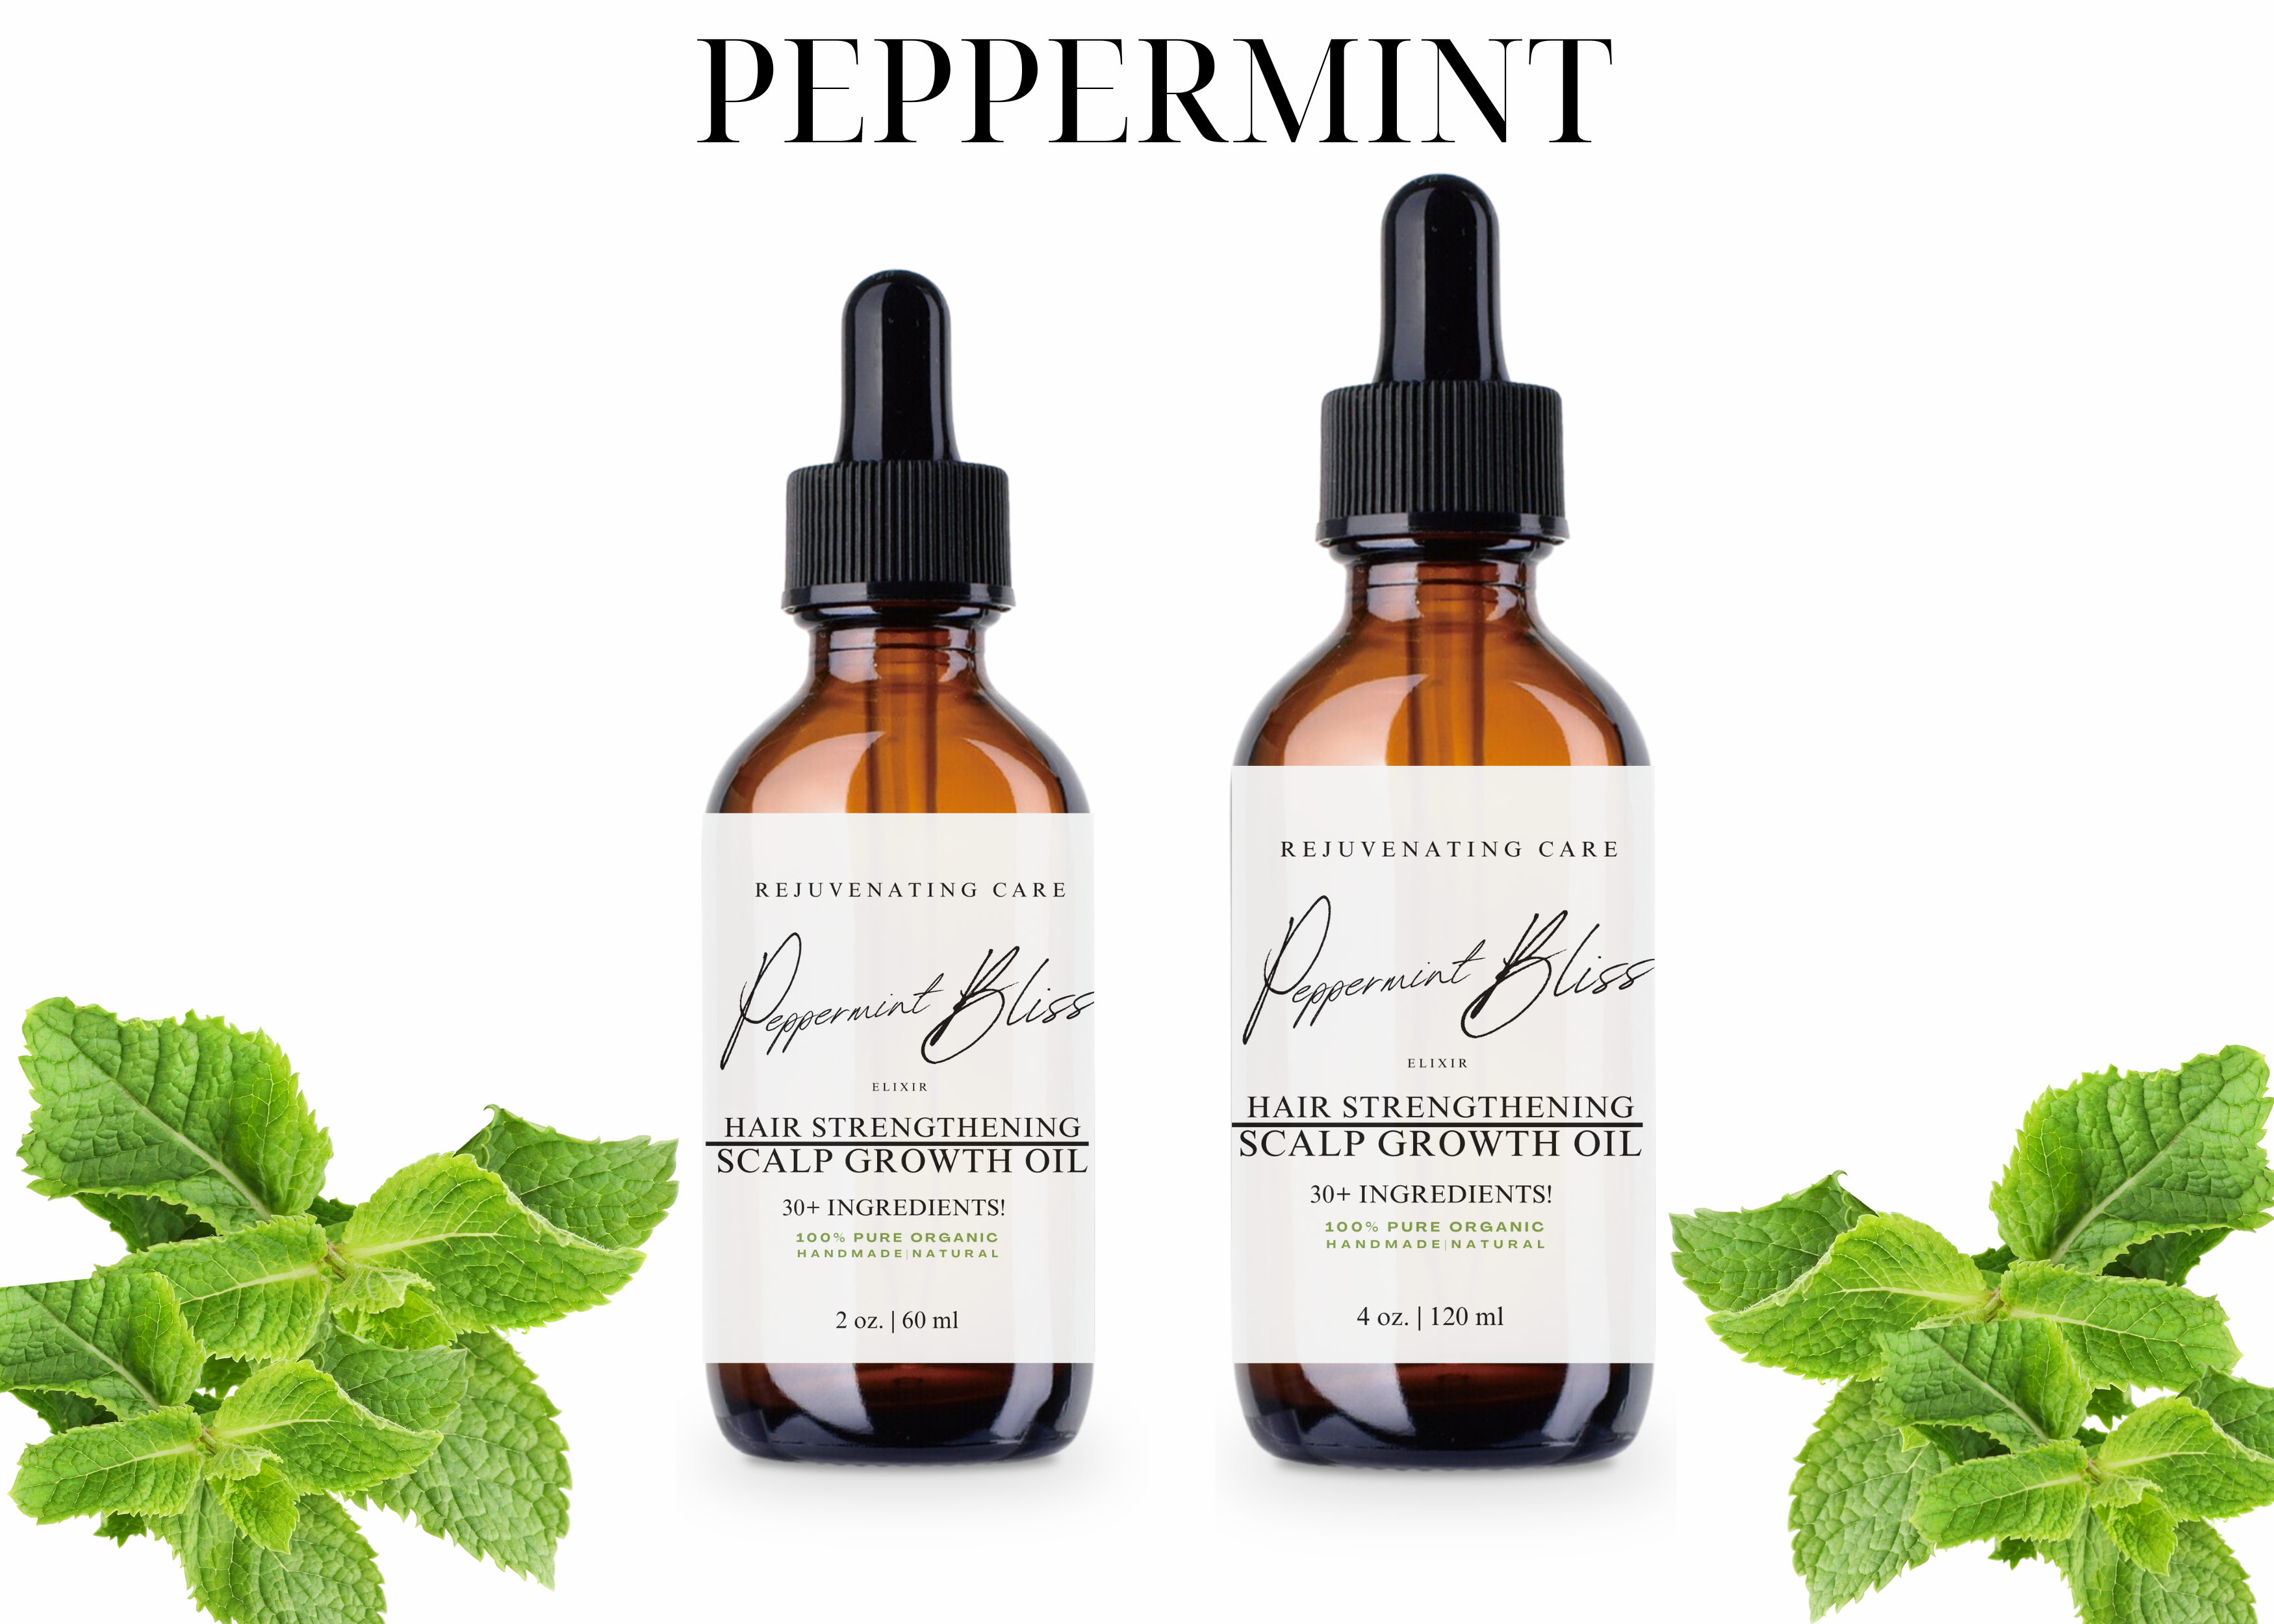 Peppermint Hair Strengthening and Scalp Growth Oil 2 ounce